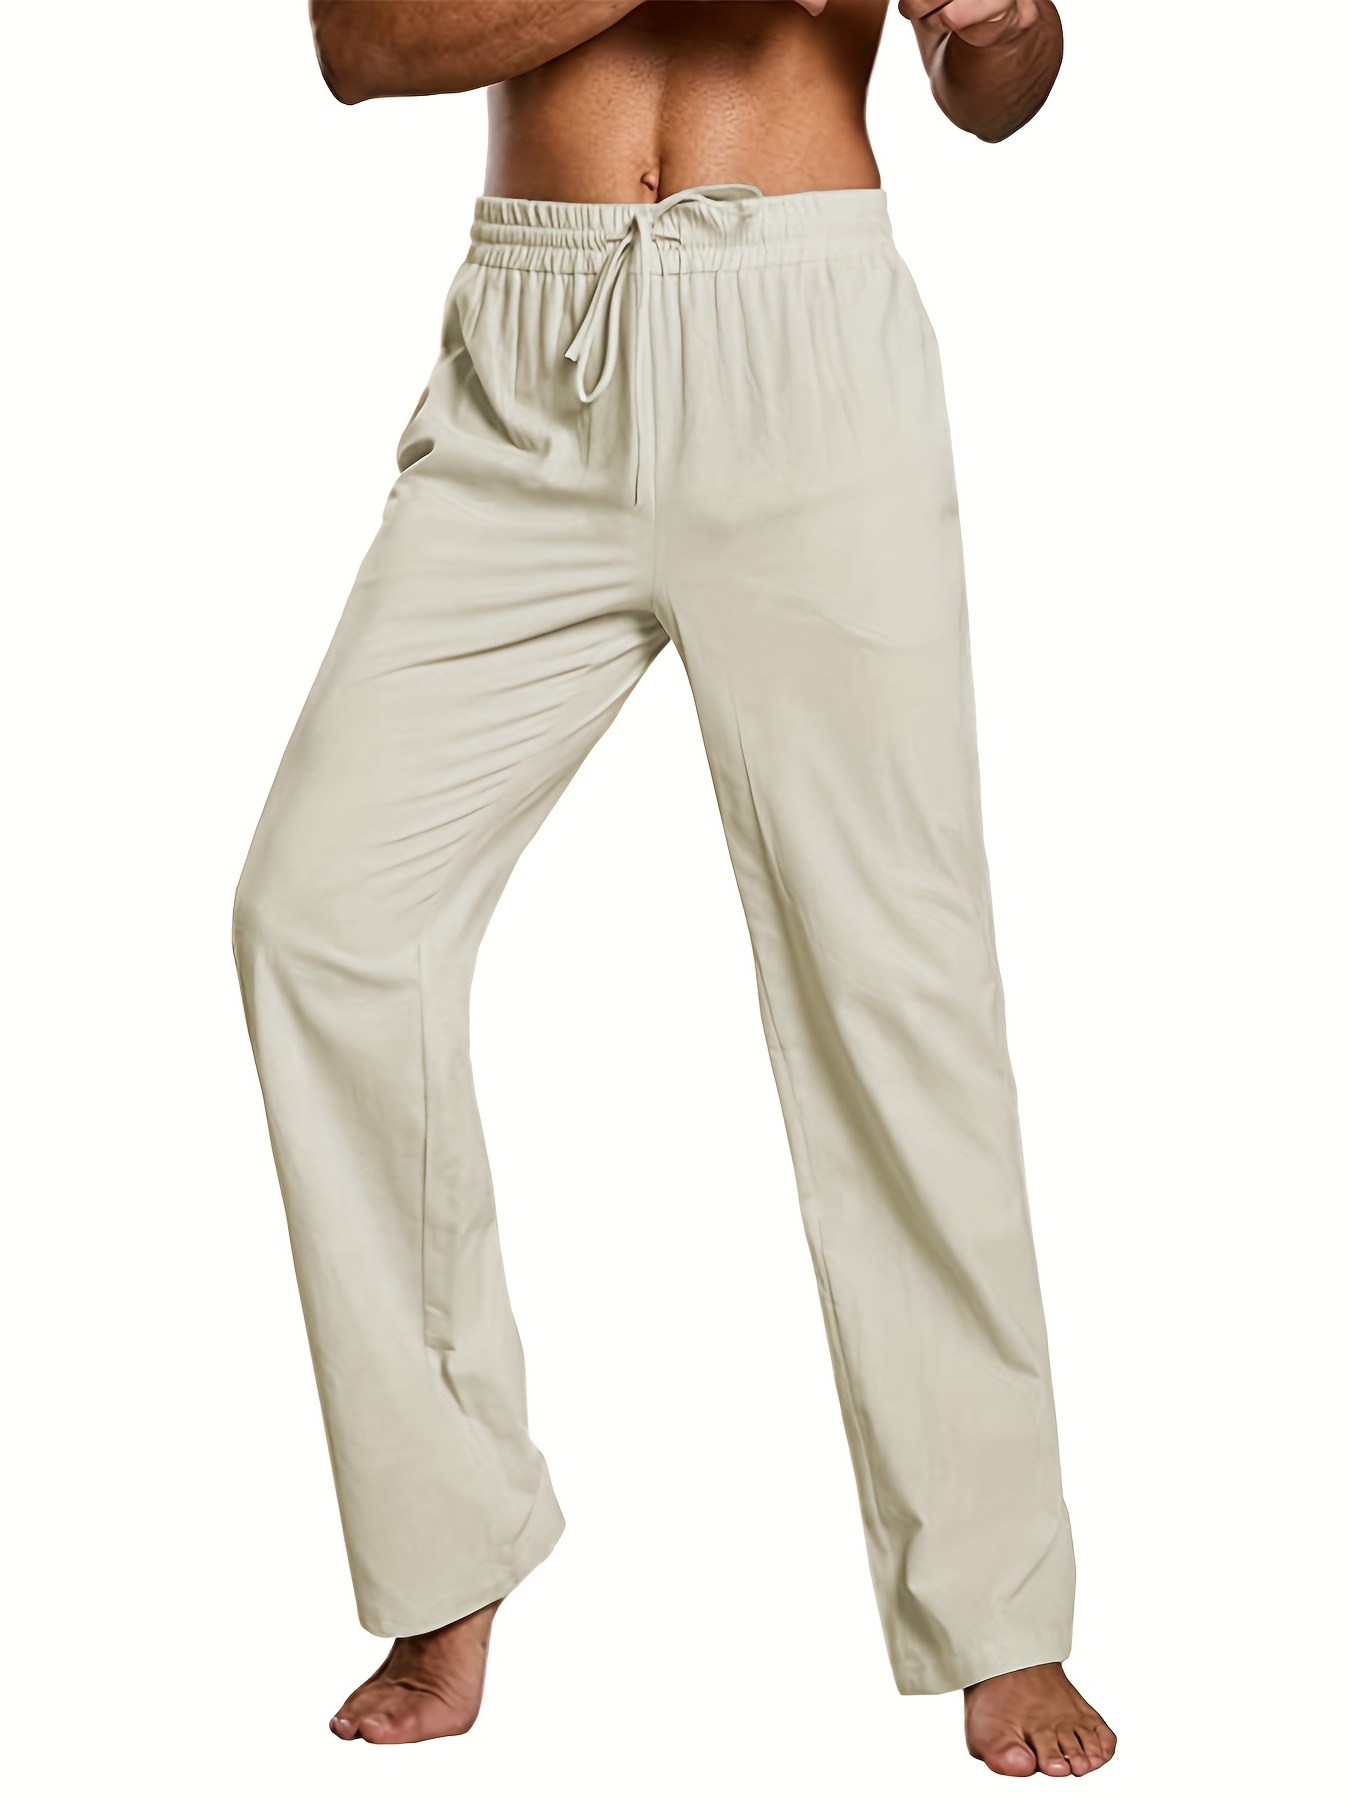 Enjoybuy Mens Summer Cotton Linen Long Casual Pants, 01-beige